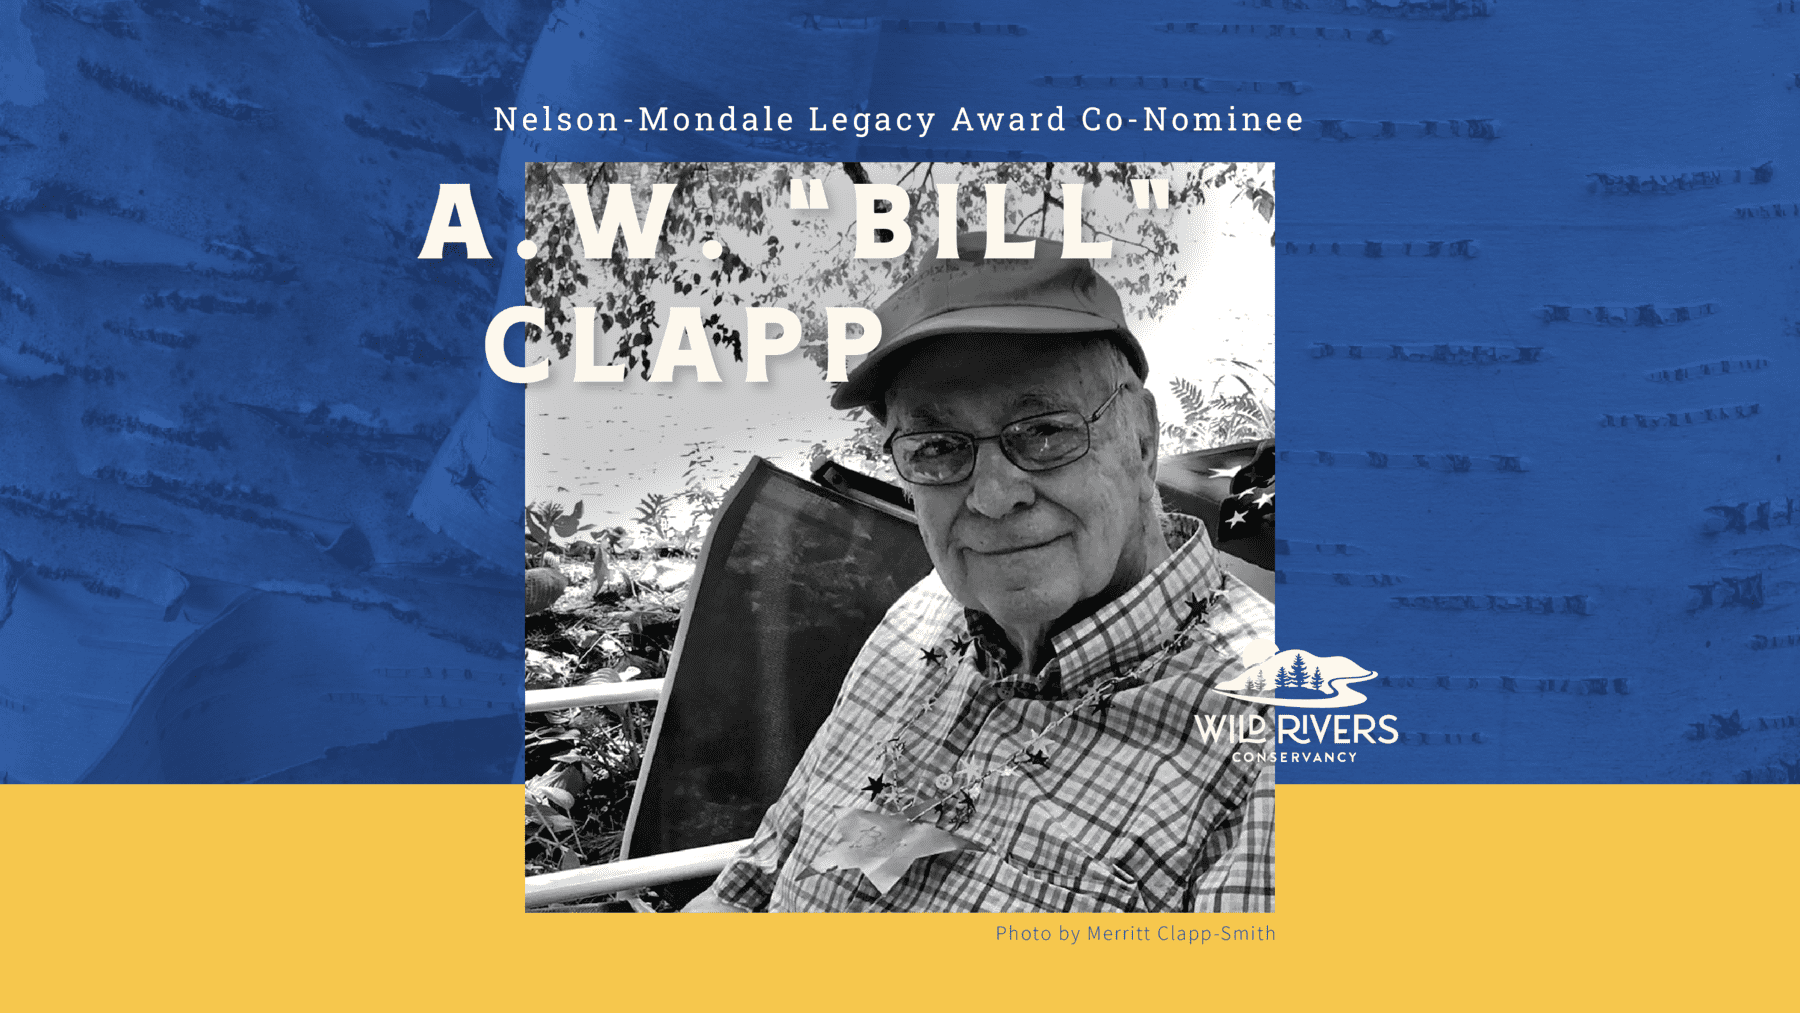 Nelson-Mondale Legacy Award Co-Nominee Bill Clap